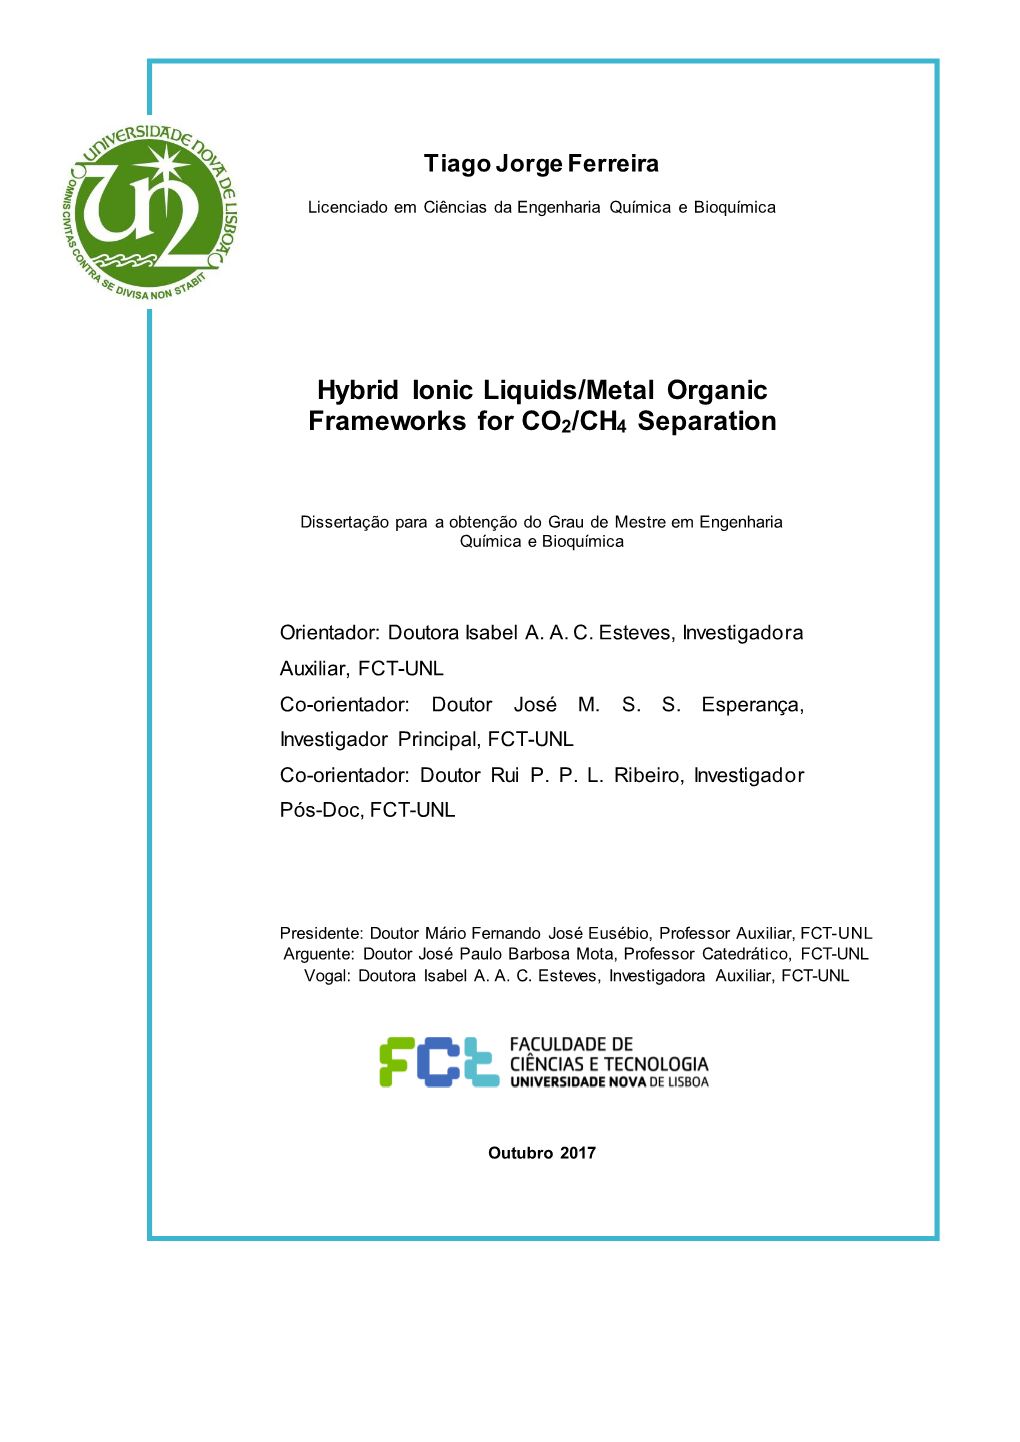 Hybrid Ionic Liquids/Metal Organic Frameworks for CO2/CH4 Separation